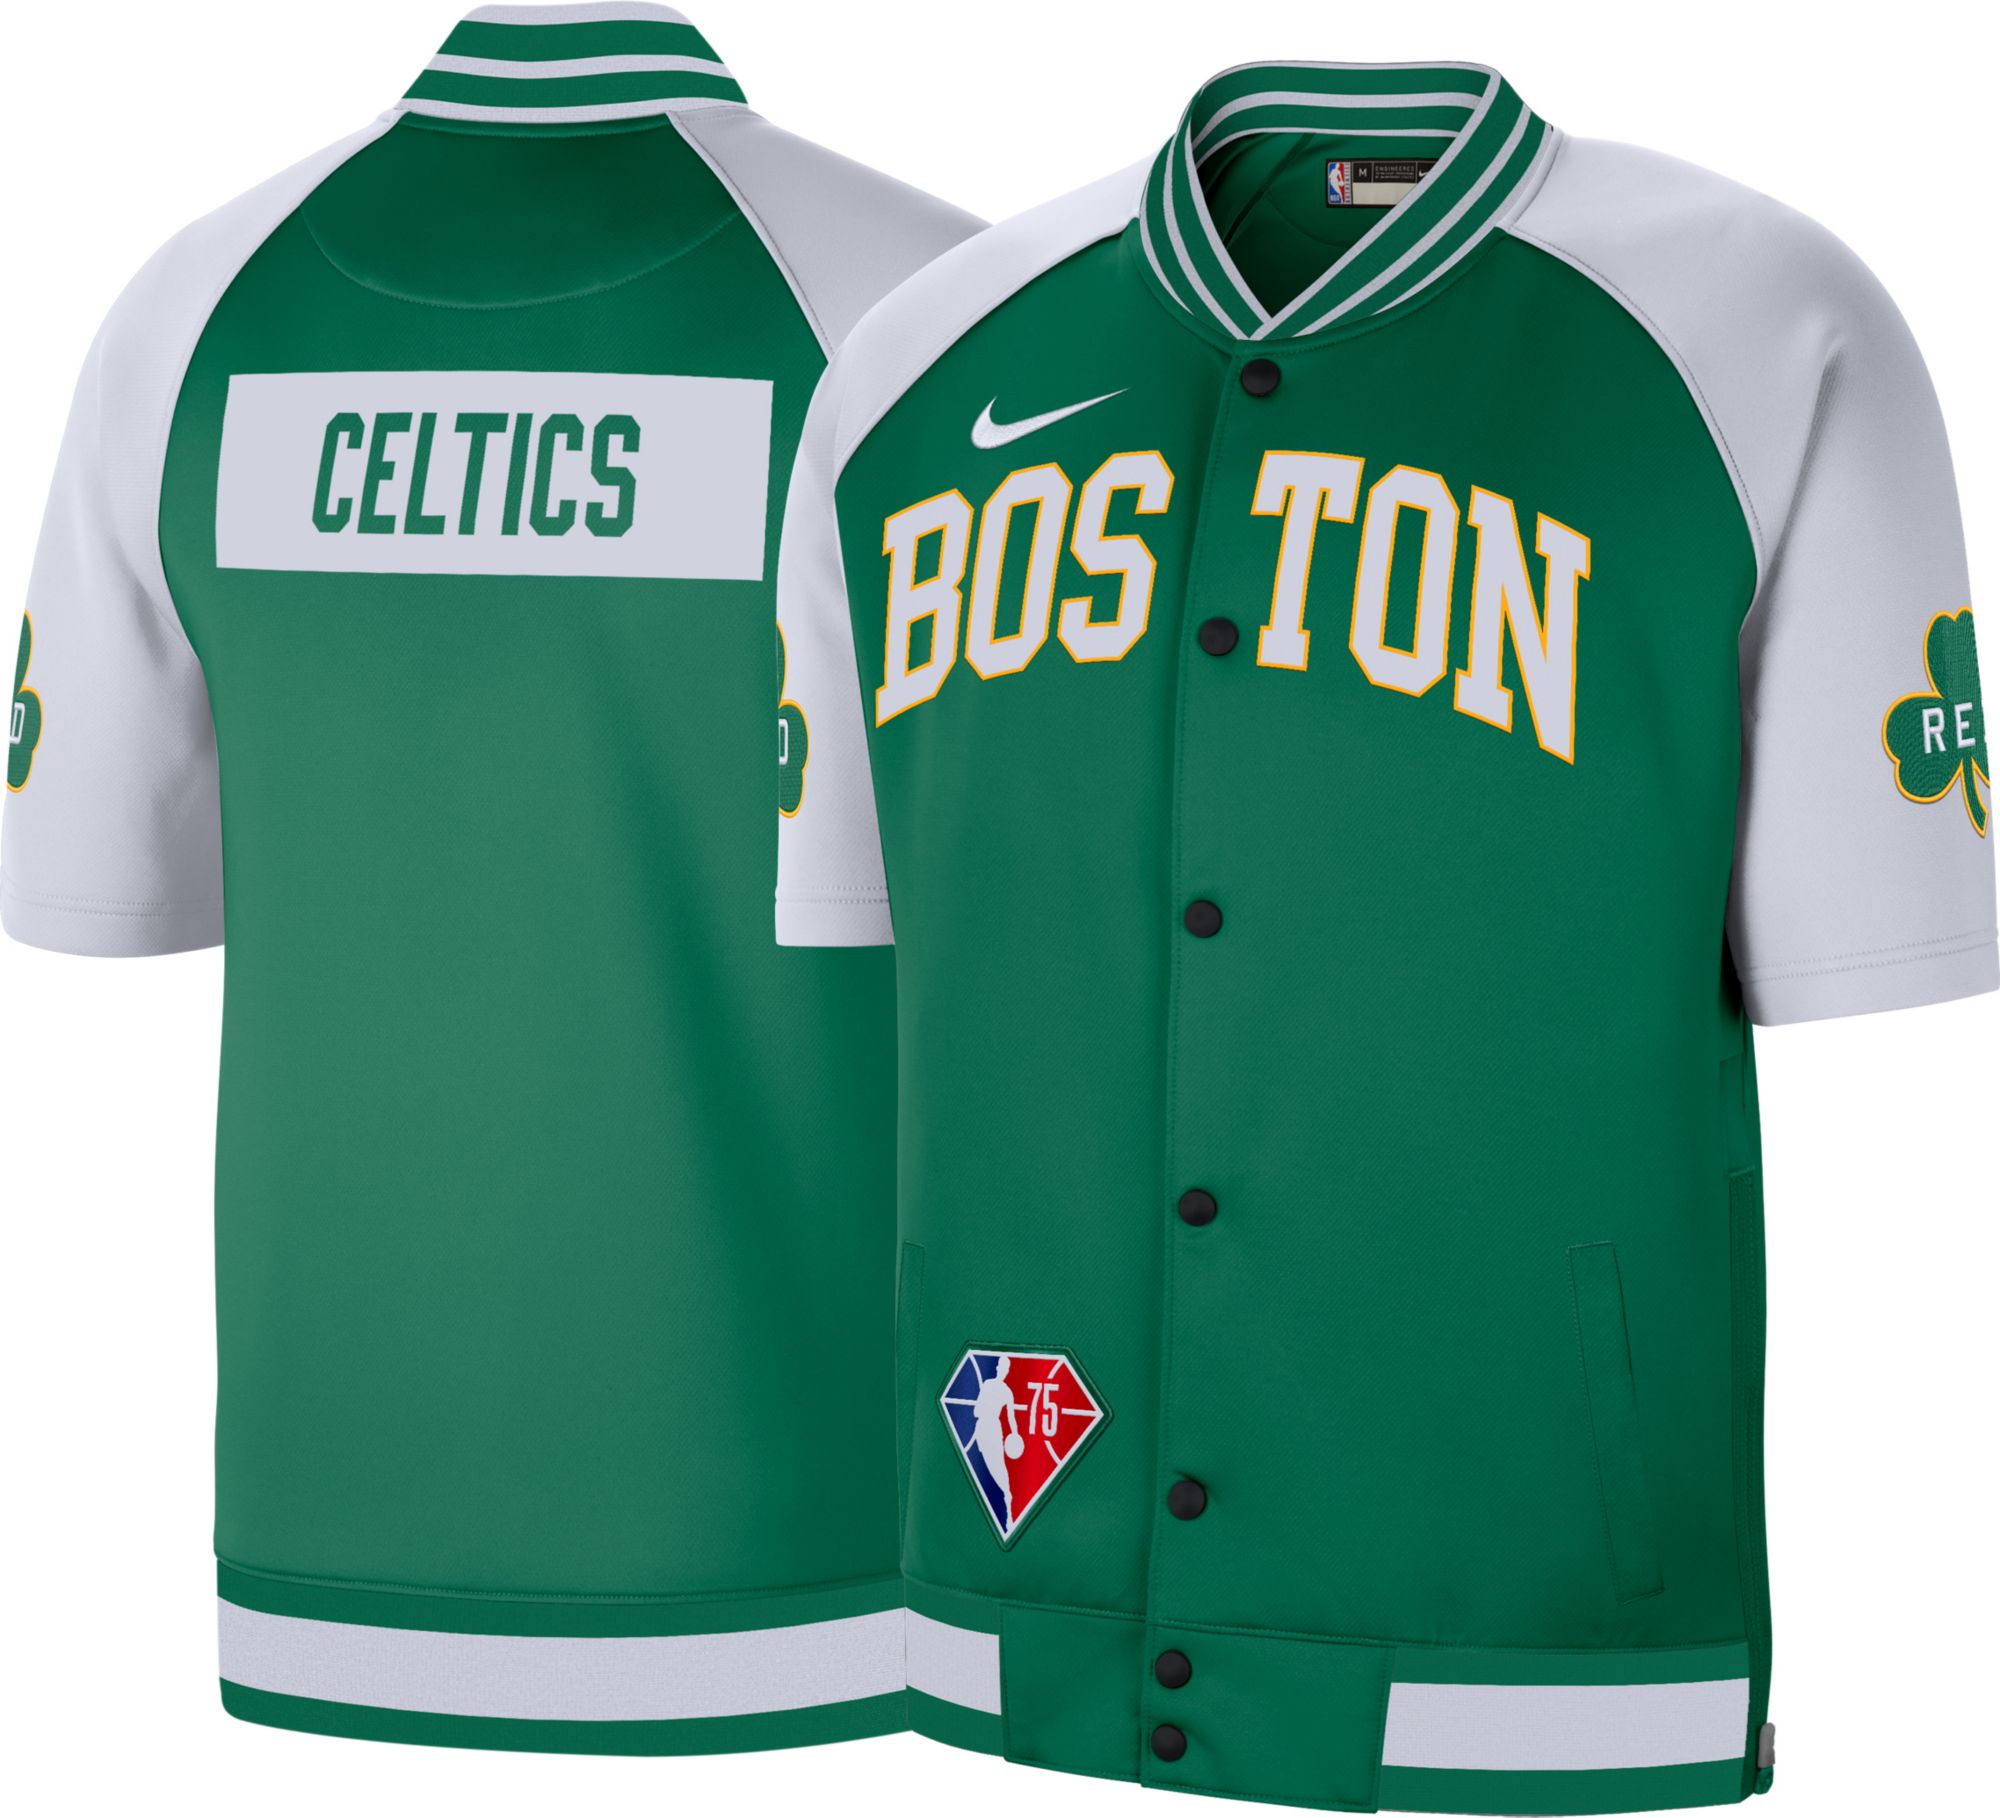 Boston Celtics Hoodies  Best Price Guarantee at DICK'S